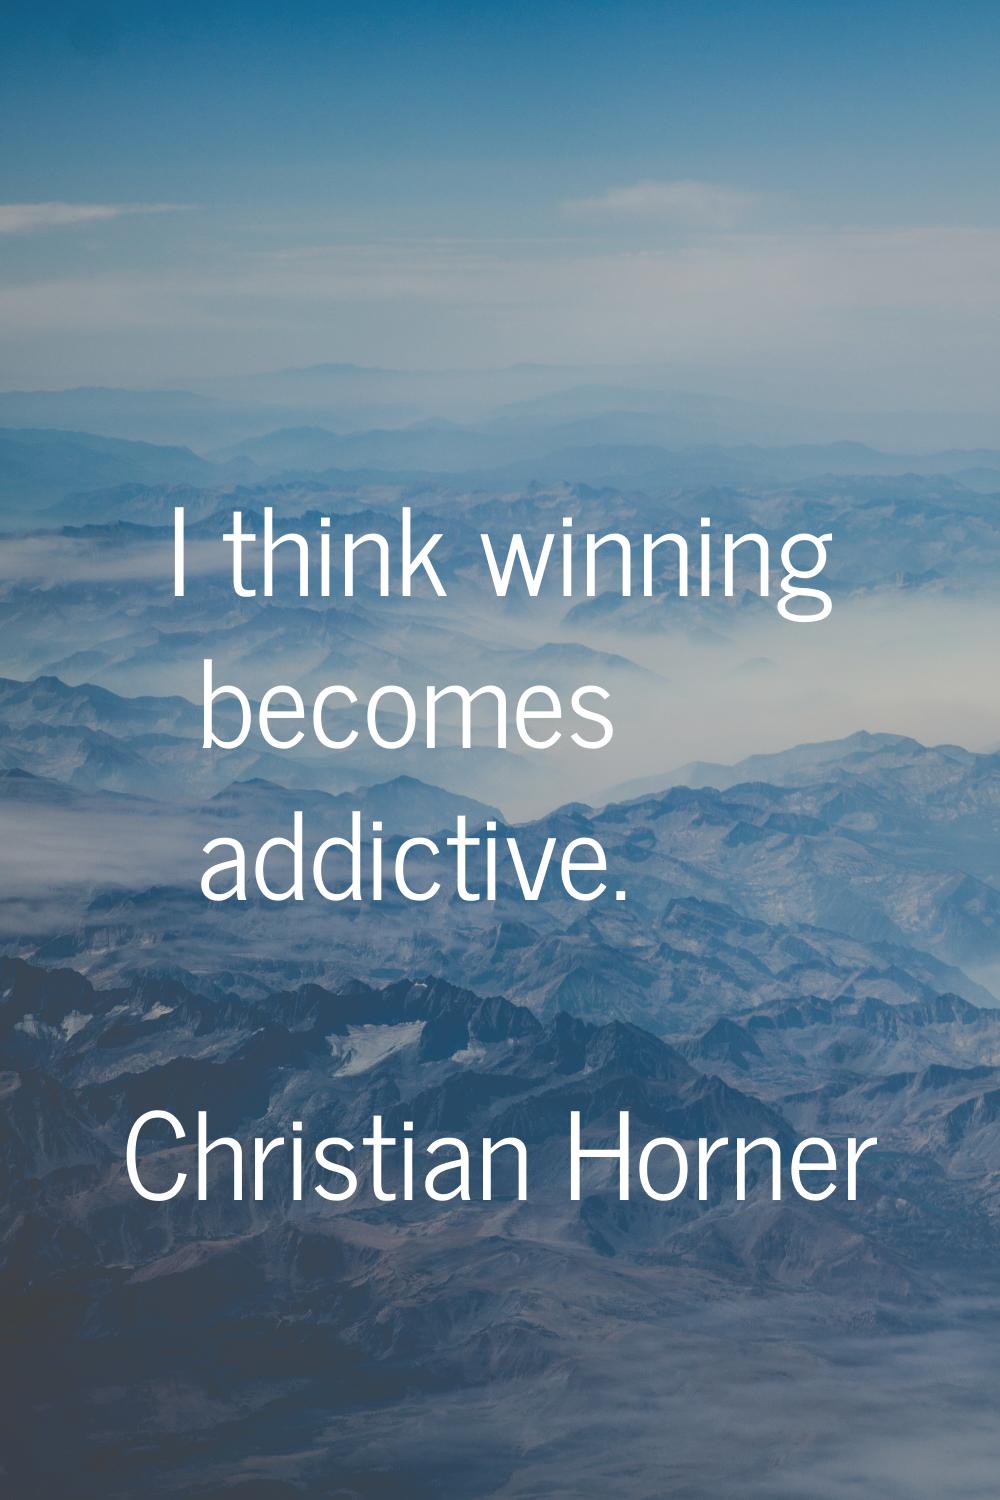 I think winning becomes addictive.